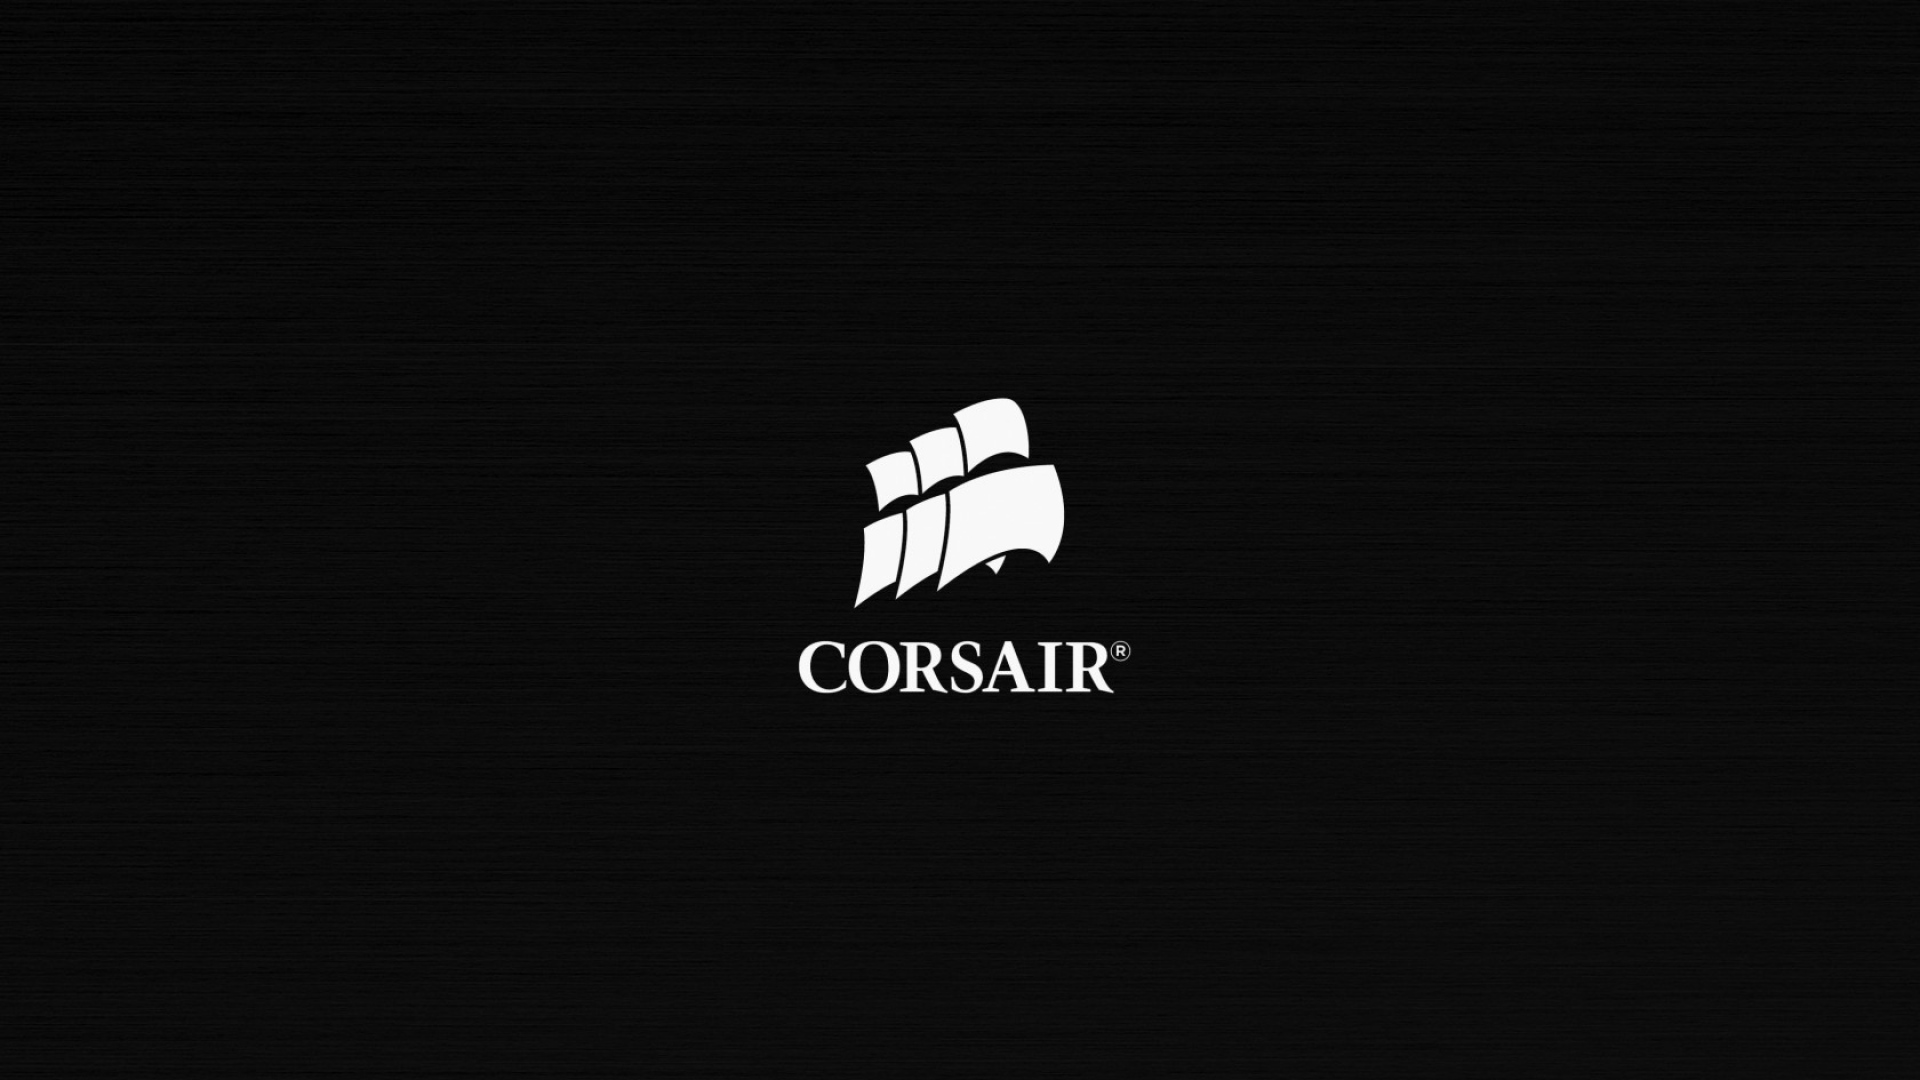 Corsair Logo Hi Tech Brand Wallpaper Background